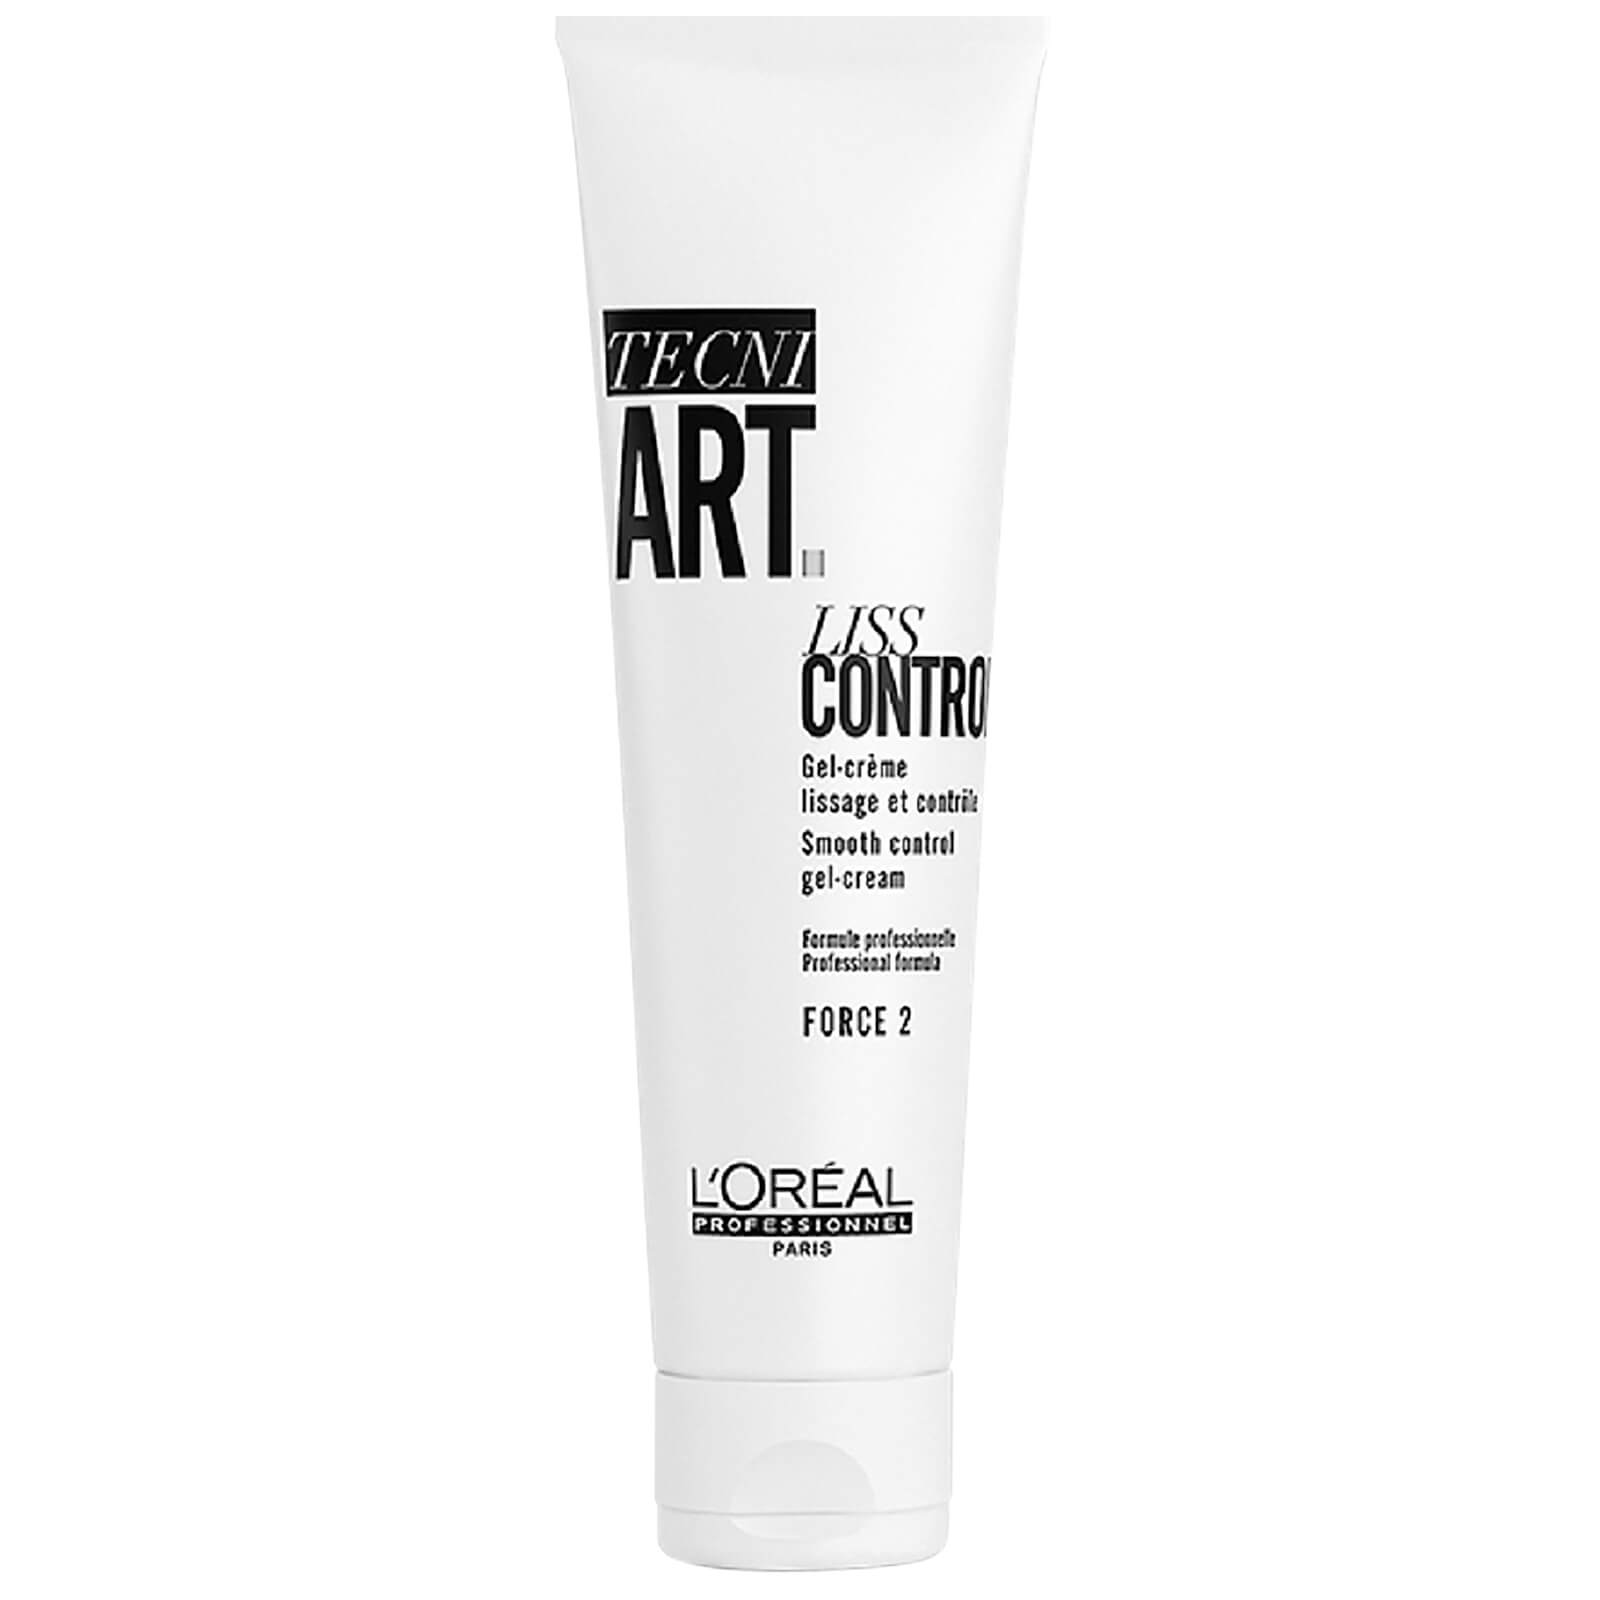 Gel-crema alisado y control L'Oréal Professionnel Tecni ART Liss Control (150ml)